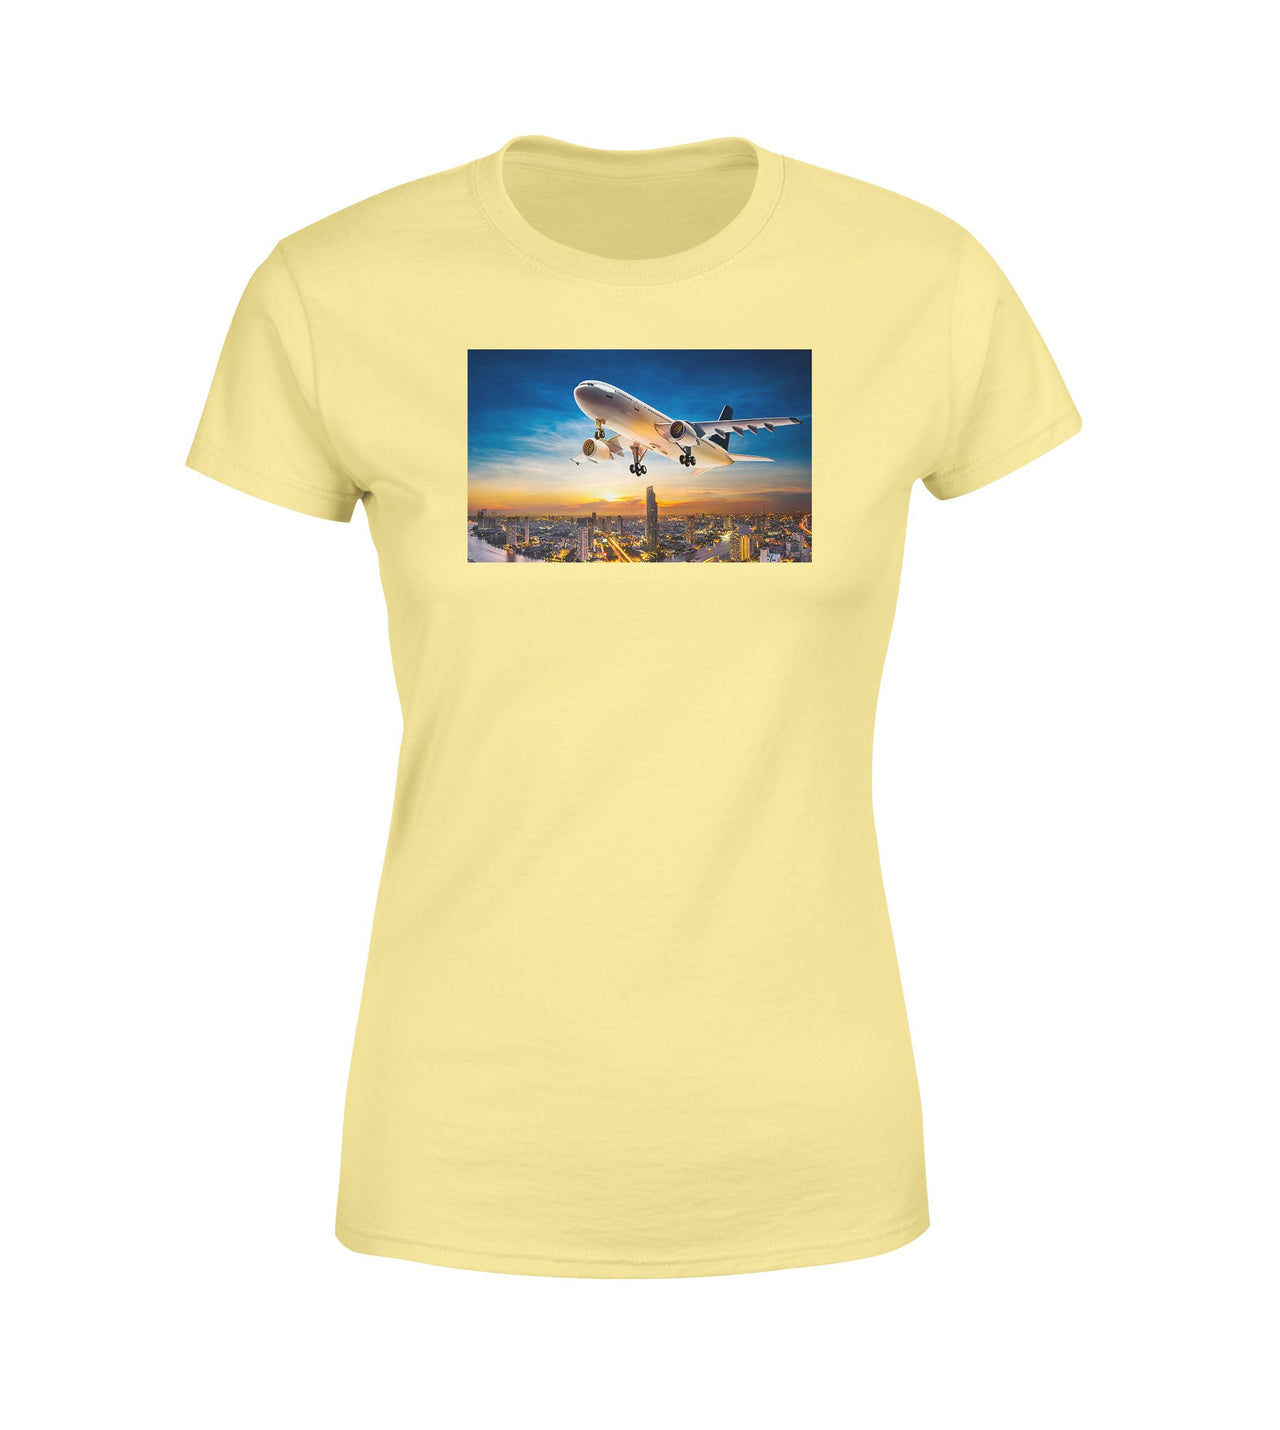 Super Aircraft over City at Sunset Designed Women T-Shirts